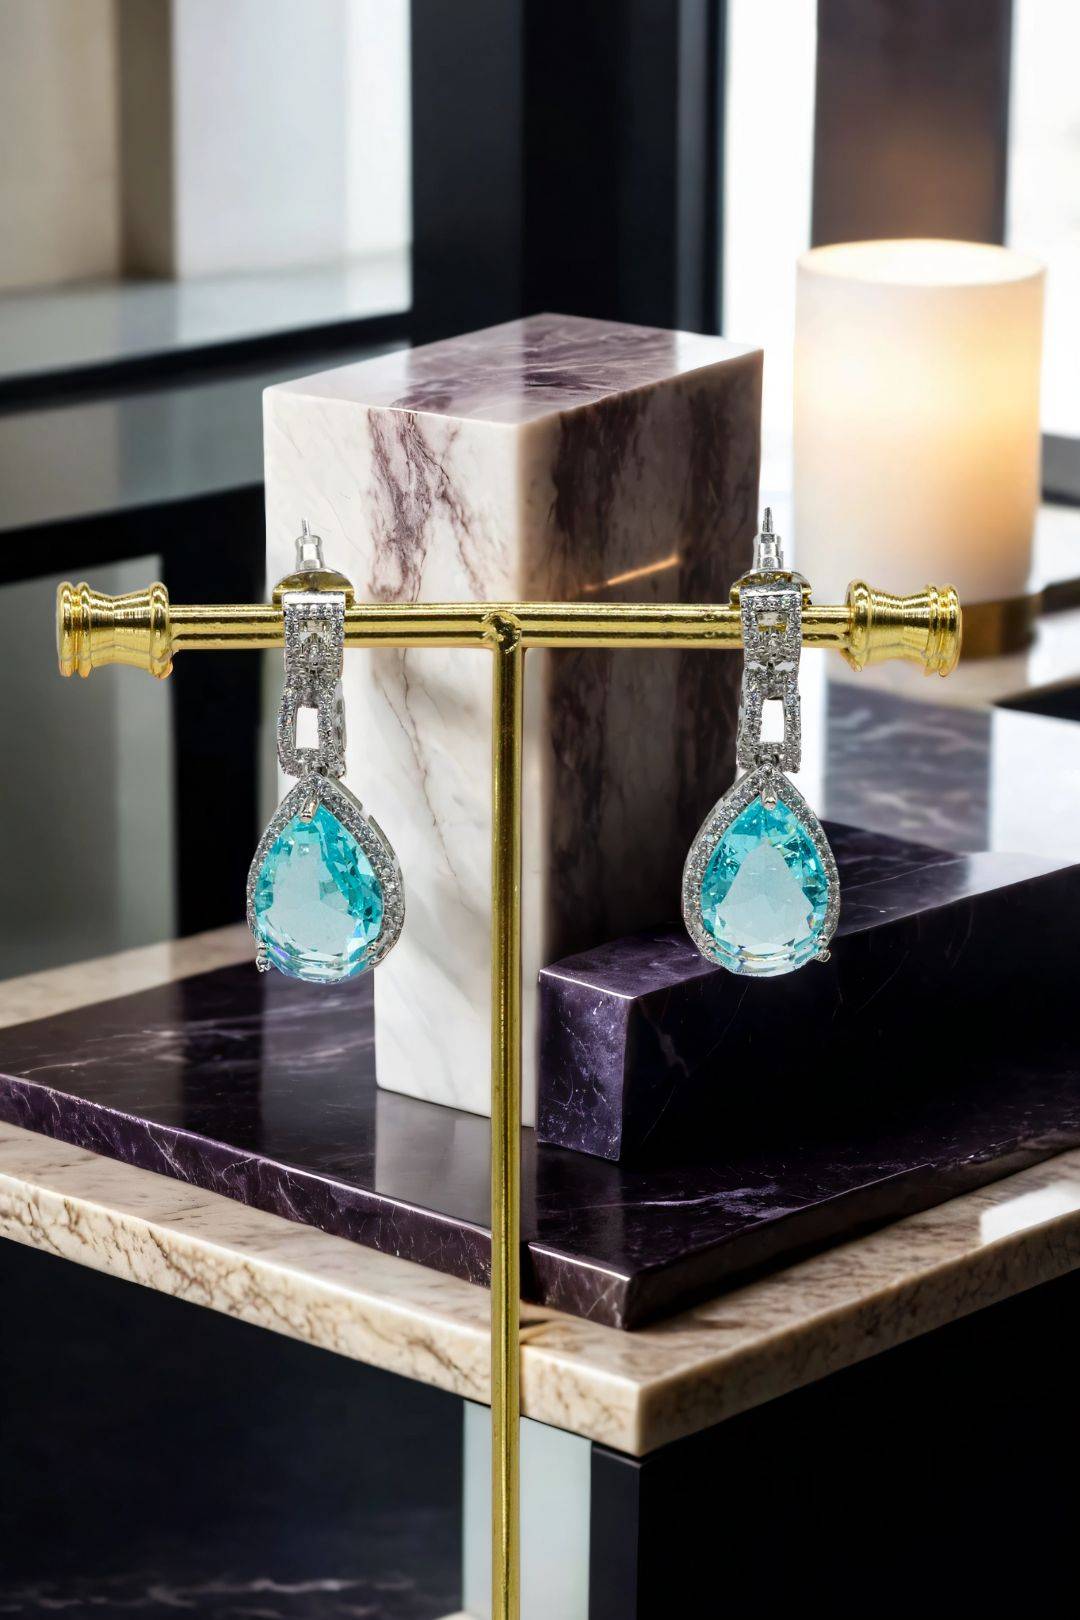 Malina Rhodium-Plated Necklace Set with Aqua Blue Teardrop Center Stone - Indian jewelry